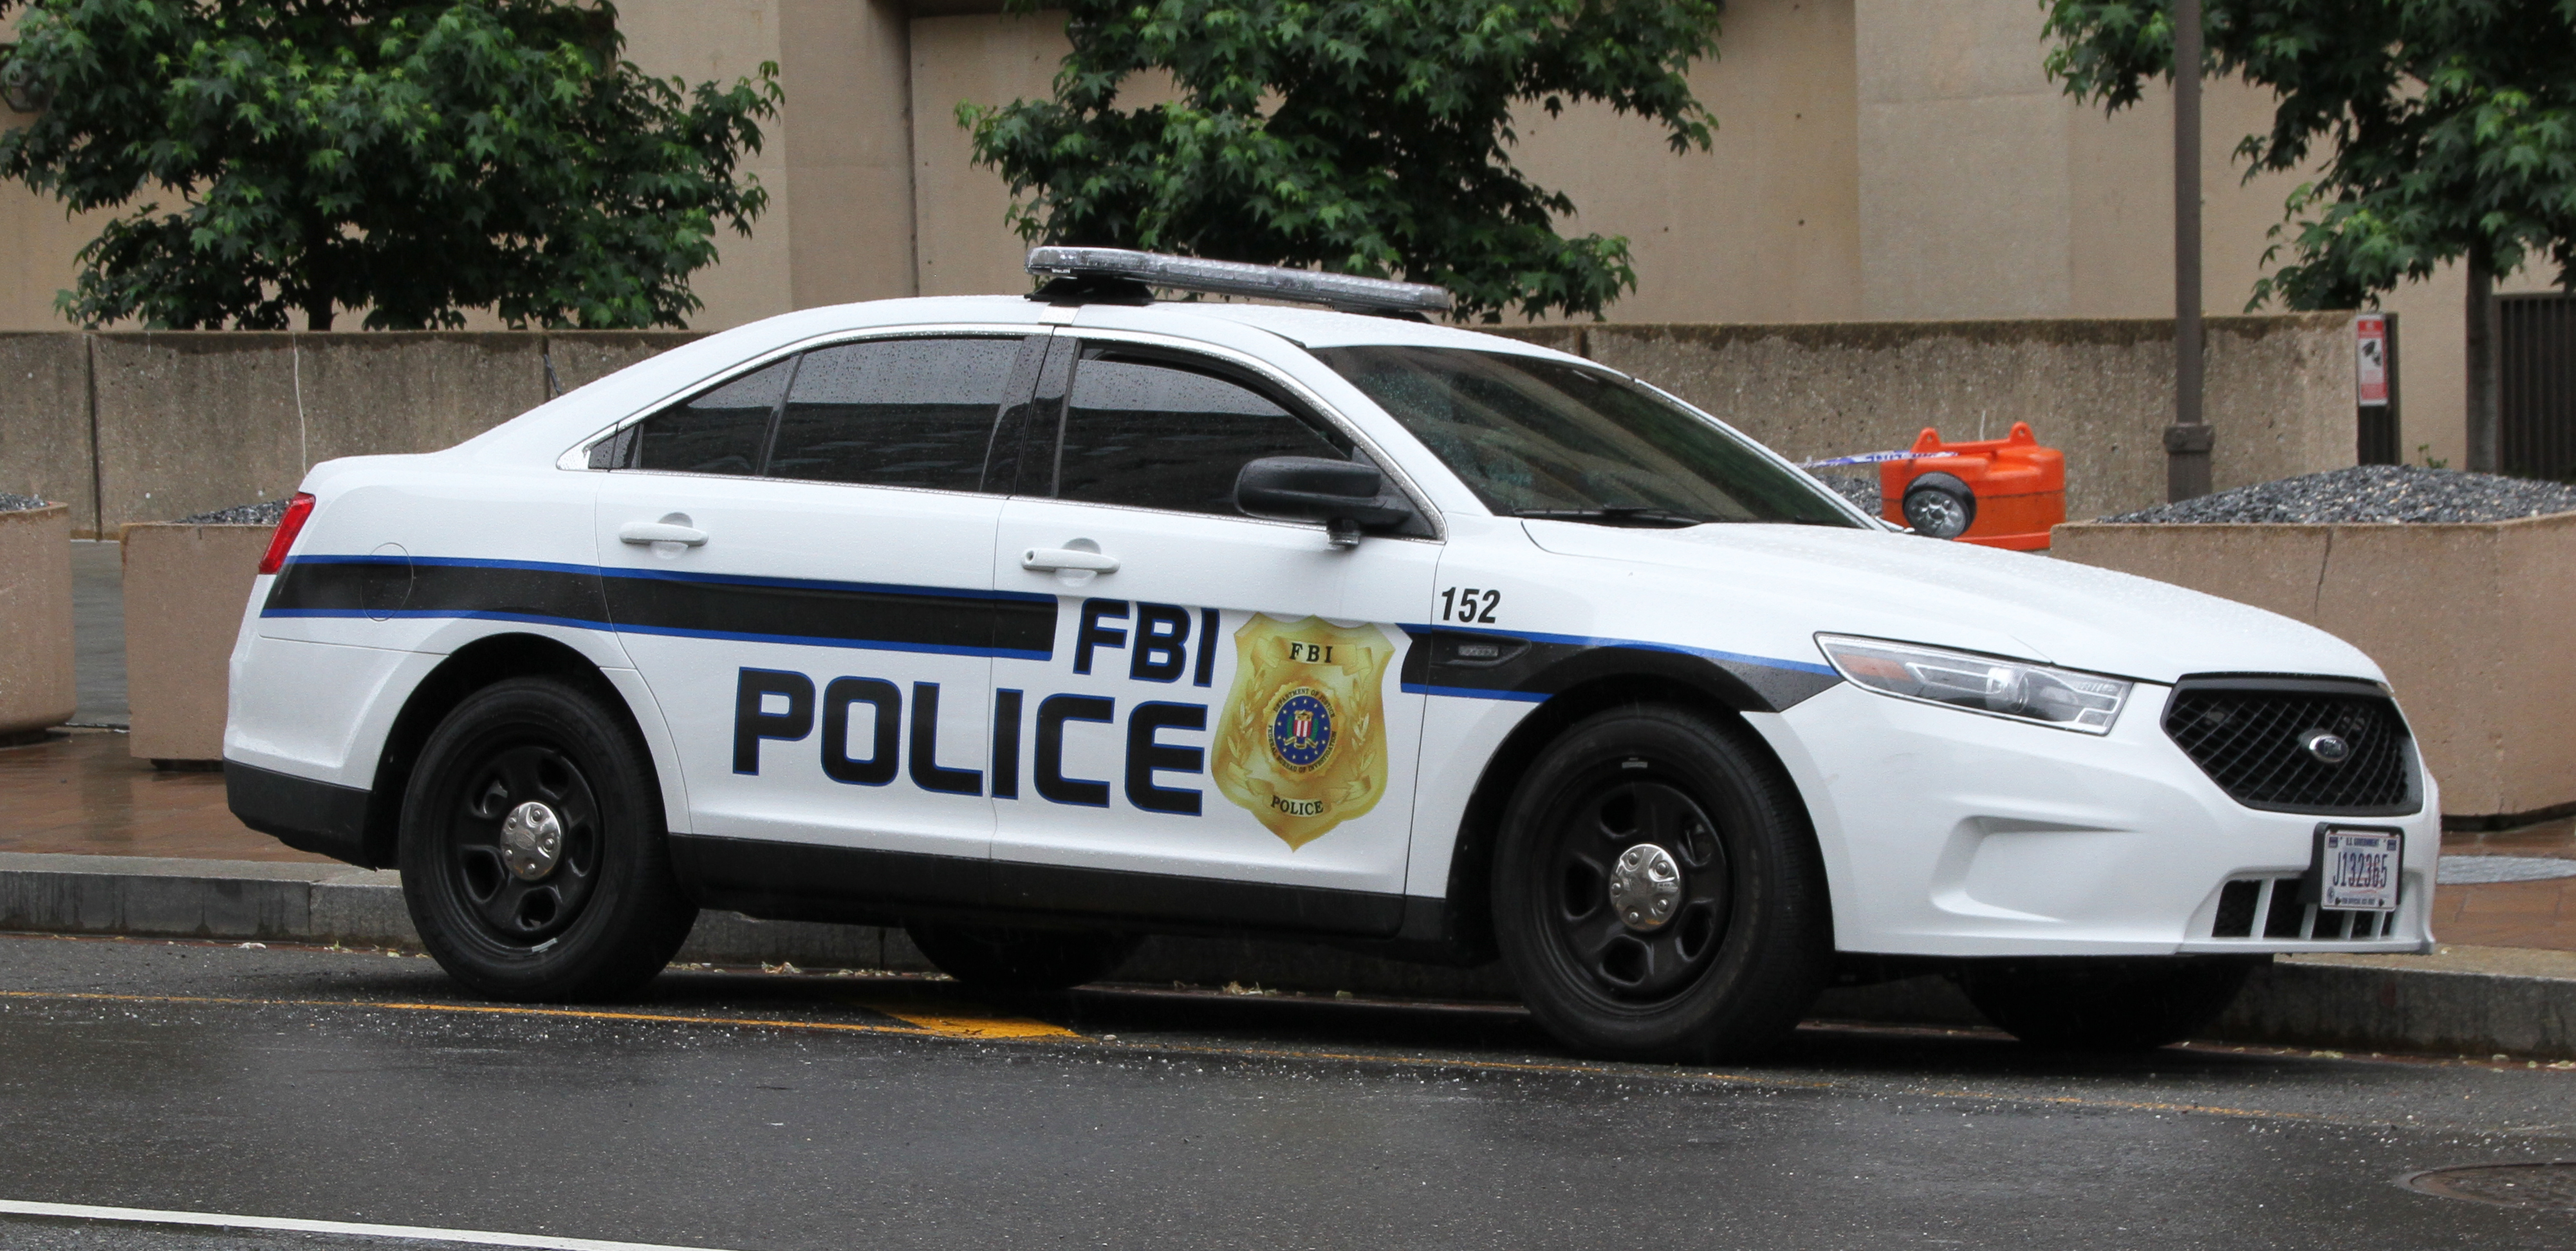 File:FBI Police Car (27730742495).jpg - Wikimedia Commons